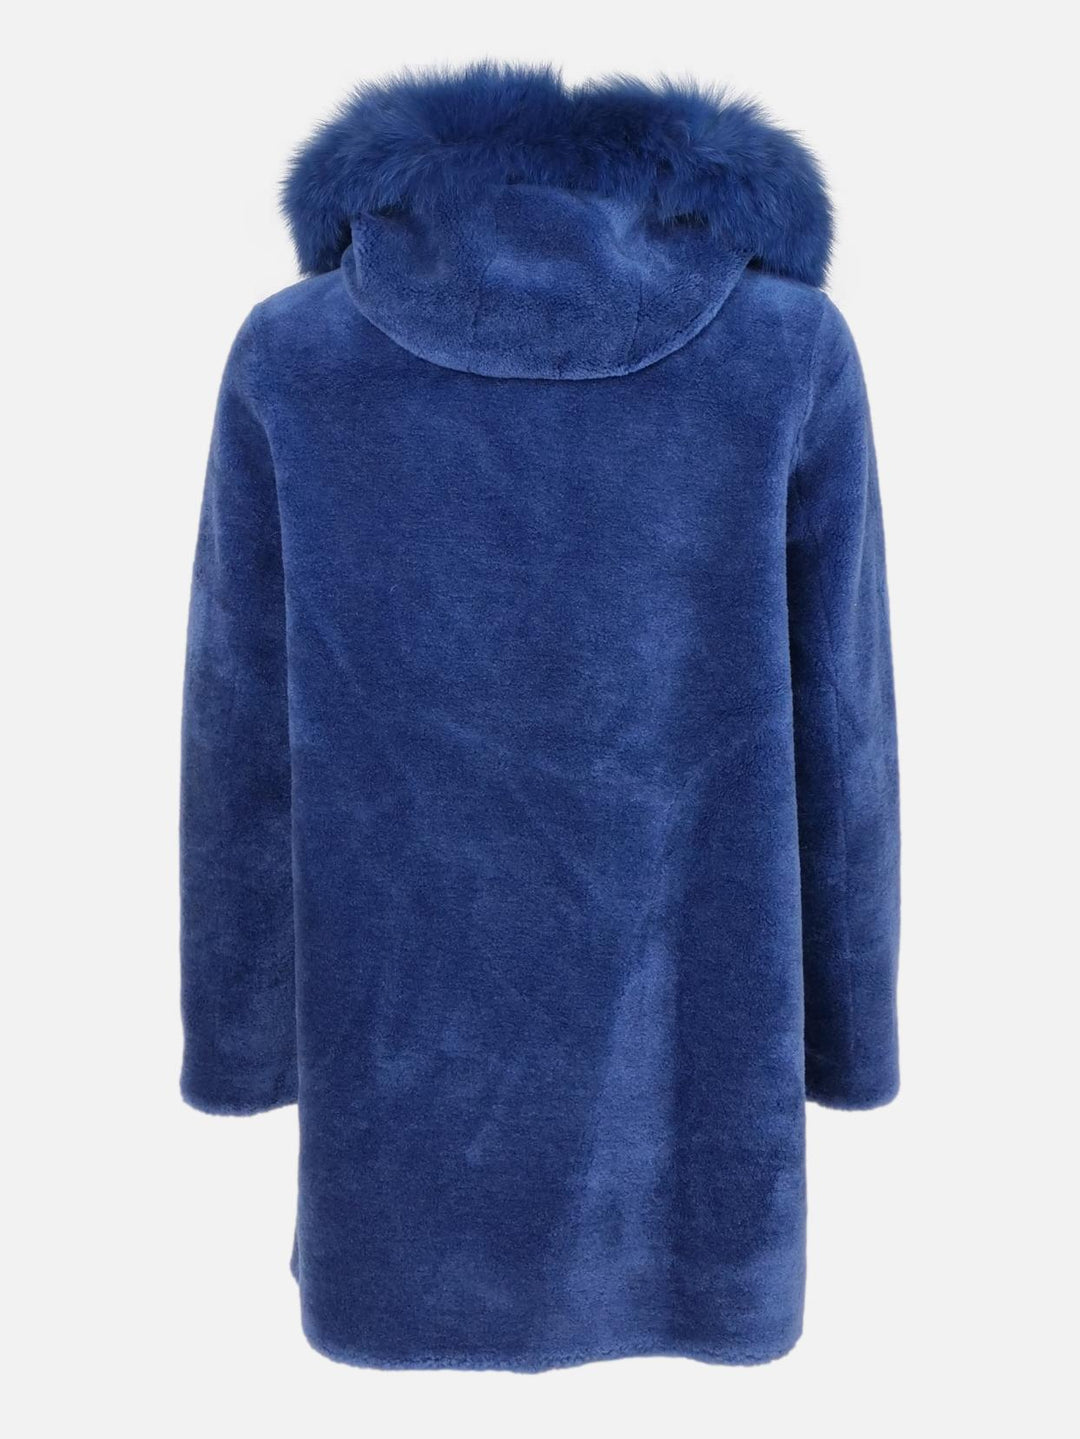 Ganix 85 cm. - Air 100% wool jakke - Dame - Blå